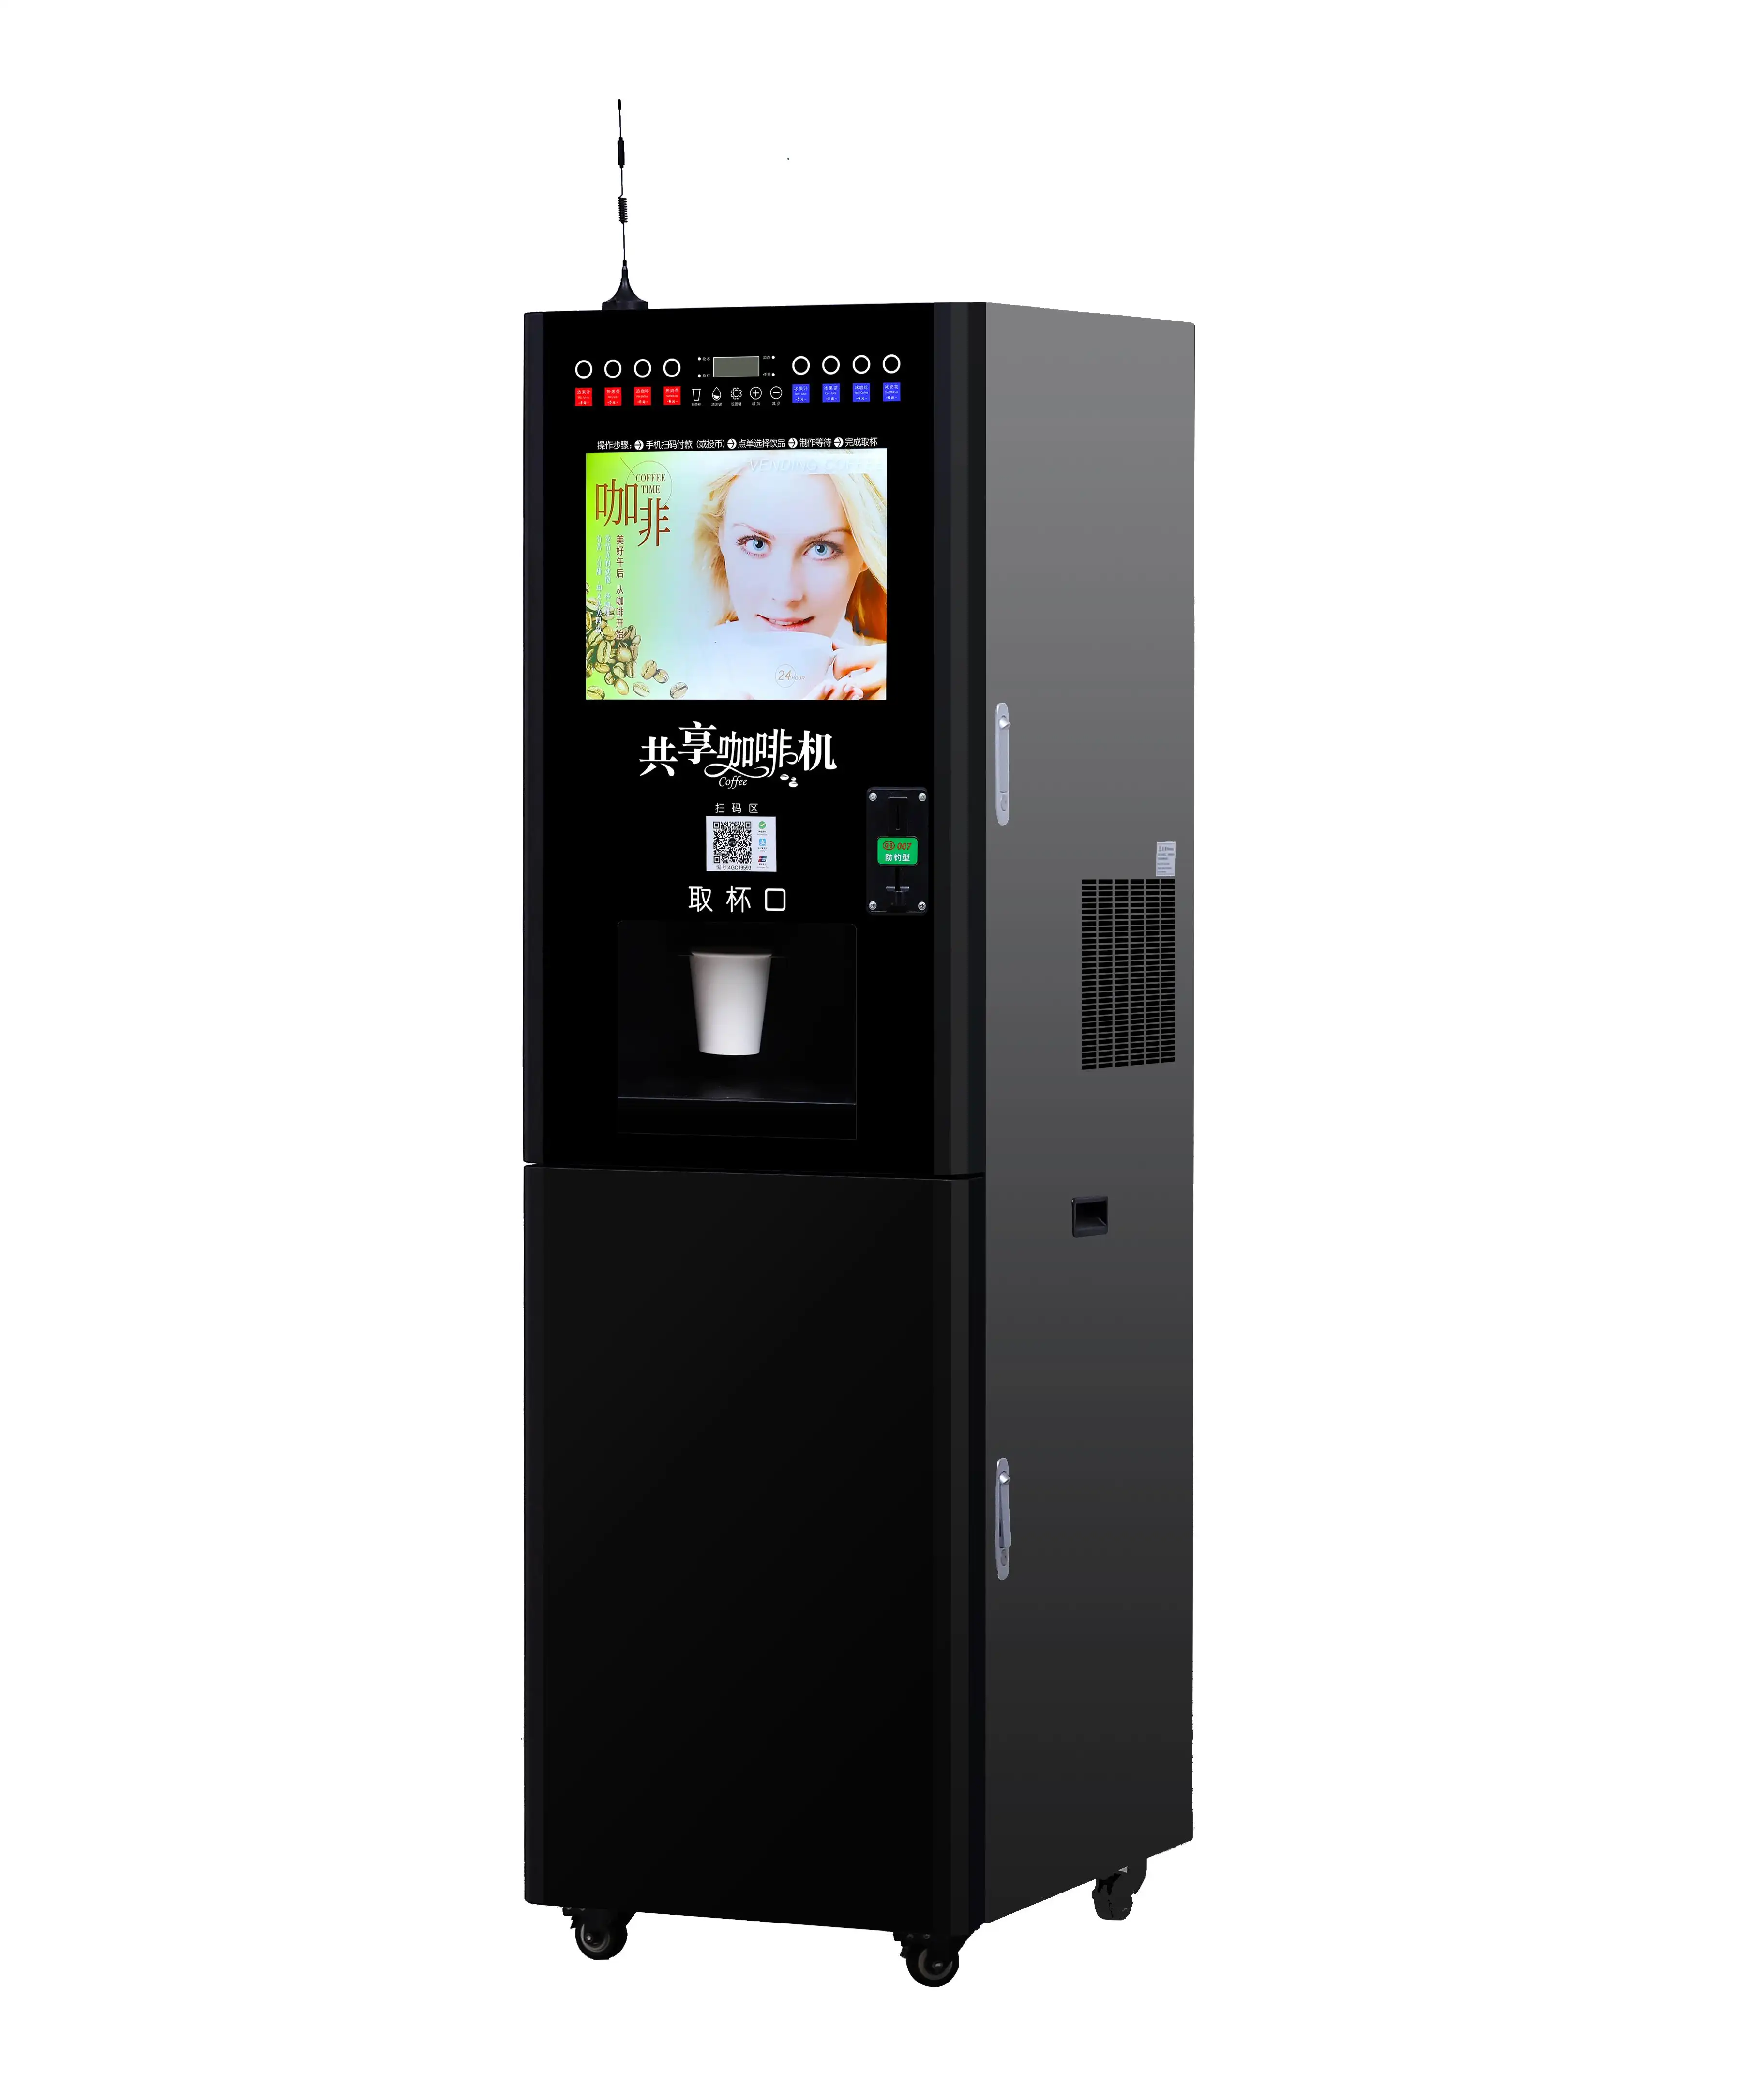 40ST (2 + 2) 찬 주스 자동 판매기 동전 커피 기계 상업적인 우유 차 자동 판매기 즉시 커피 분배기